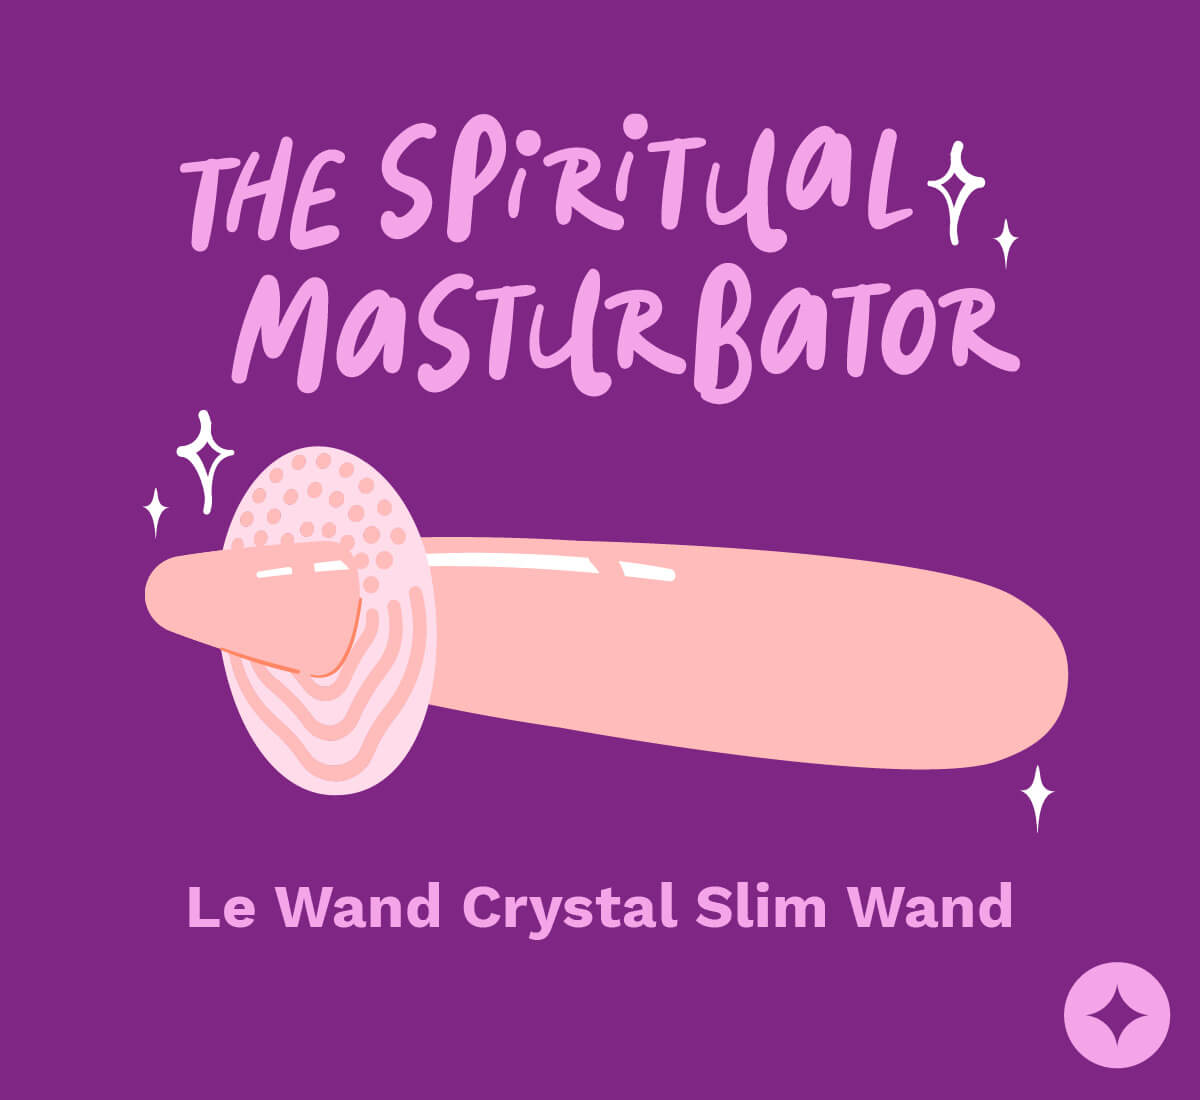 The Spiritual Masturbator AKA Le Wand Crystal Slim Wand